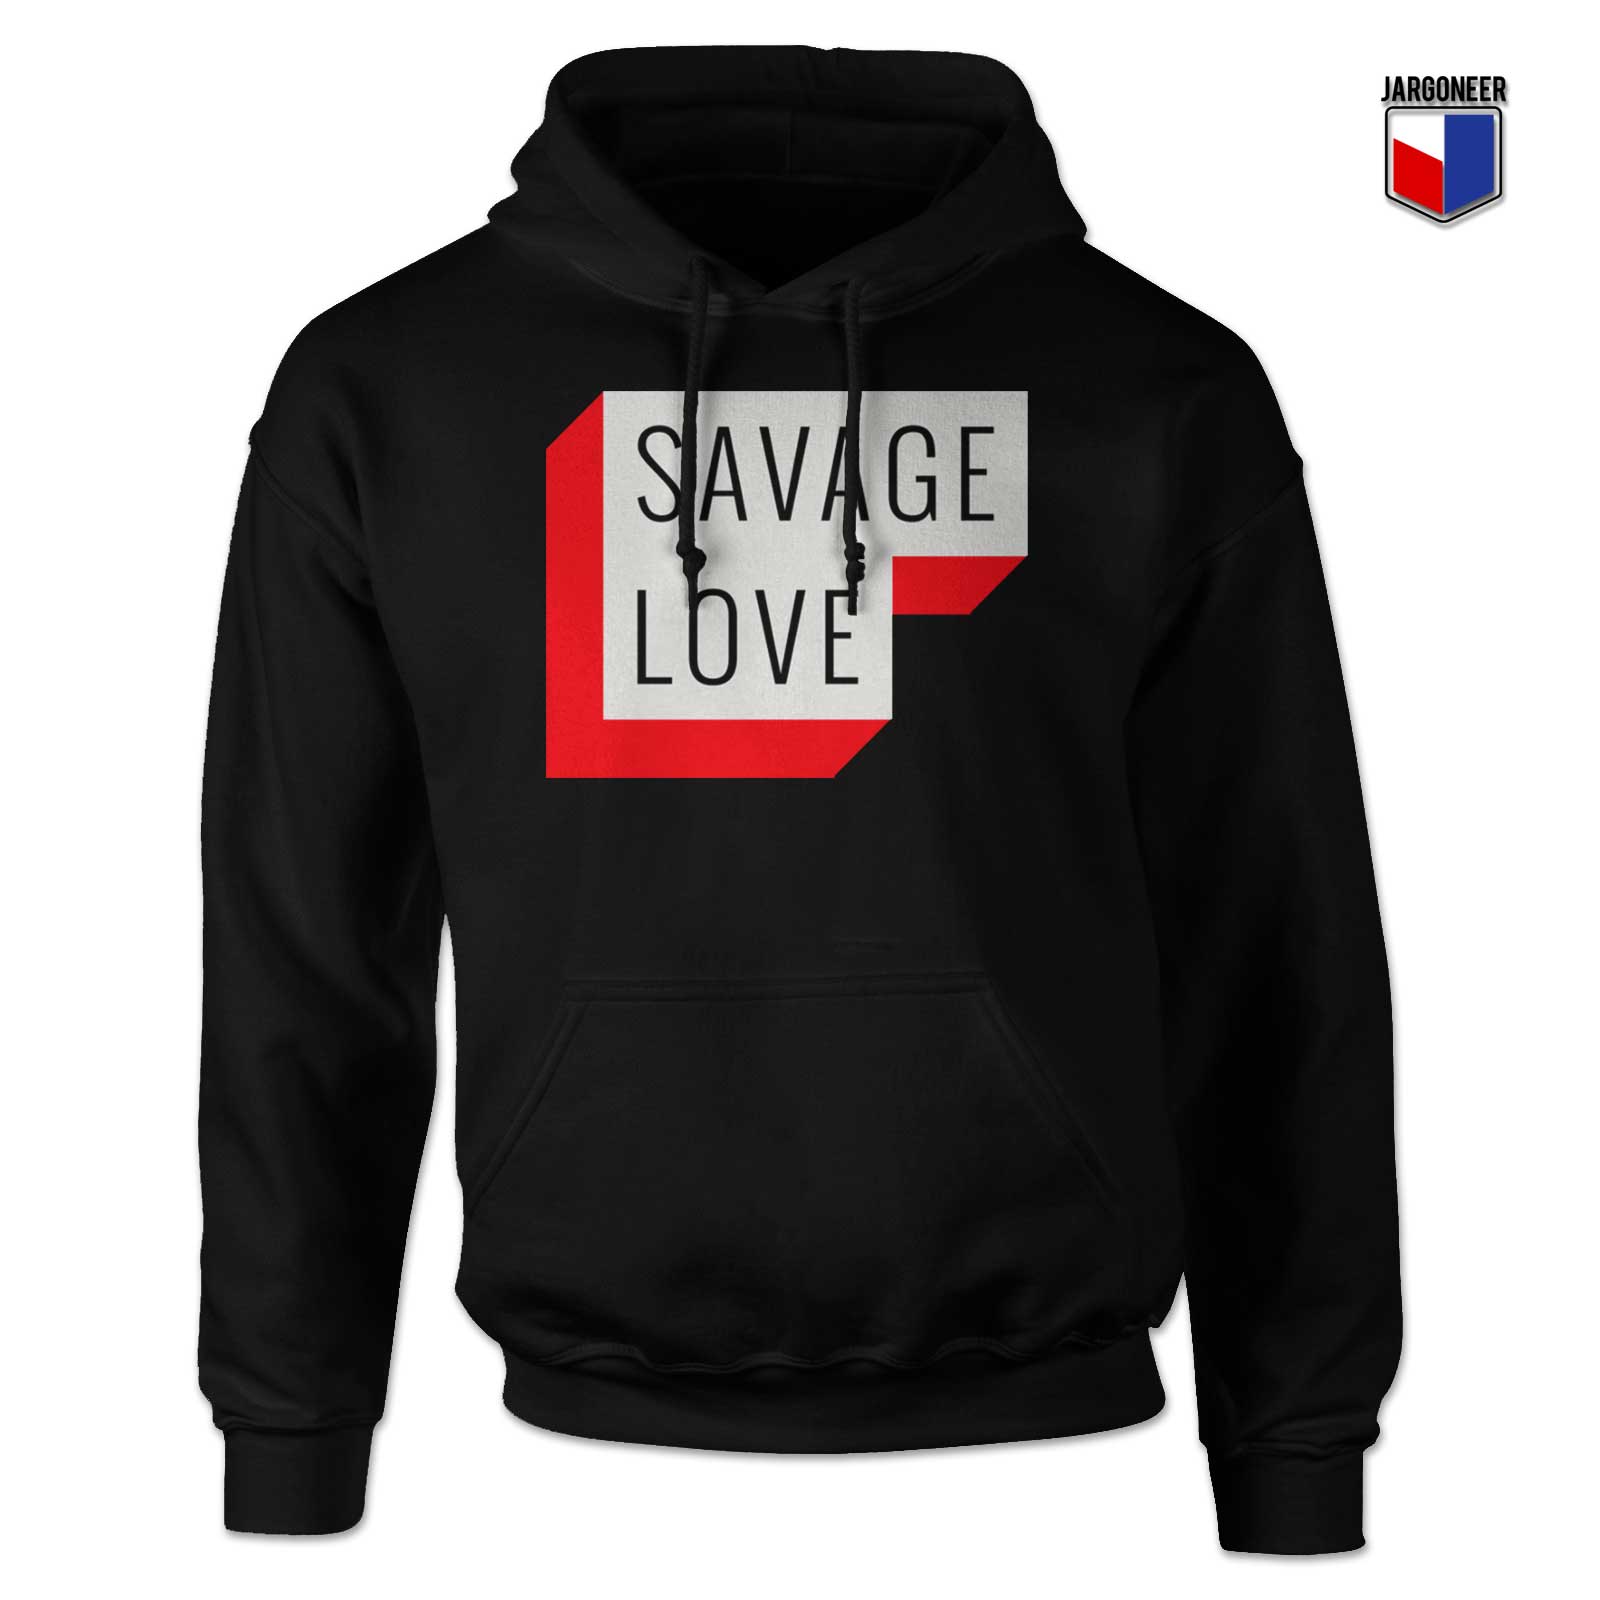 Savage Love Hoodie - Shop Unique Graphic Cool Shirt Designs